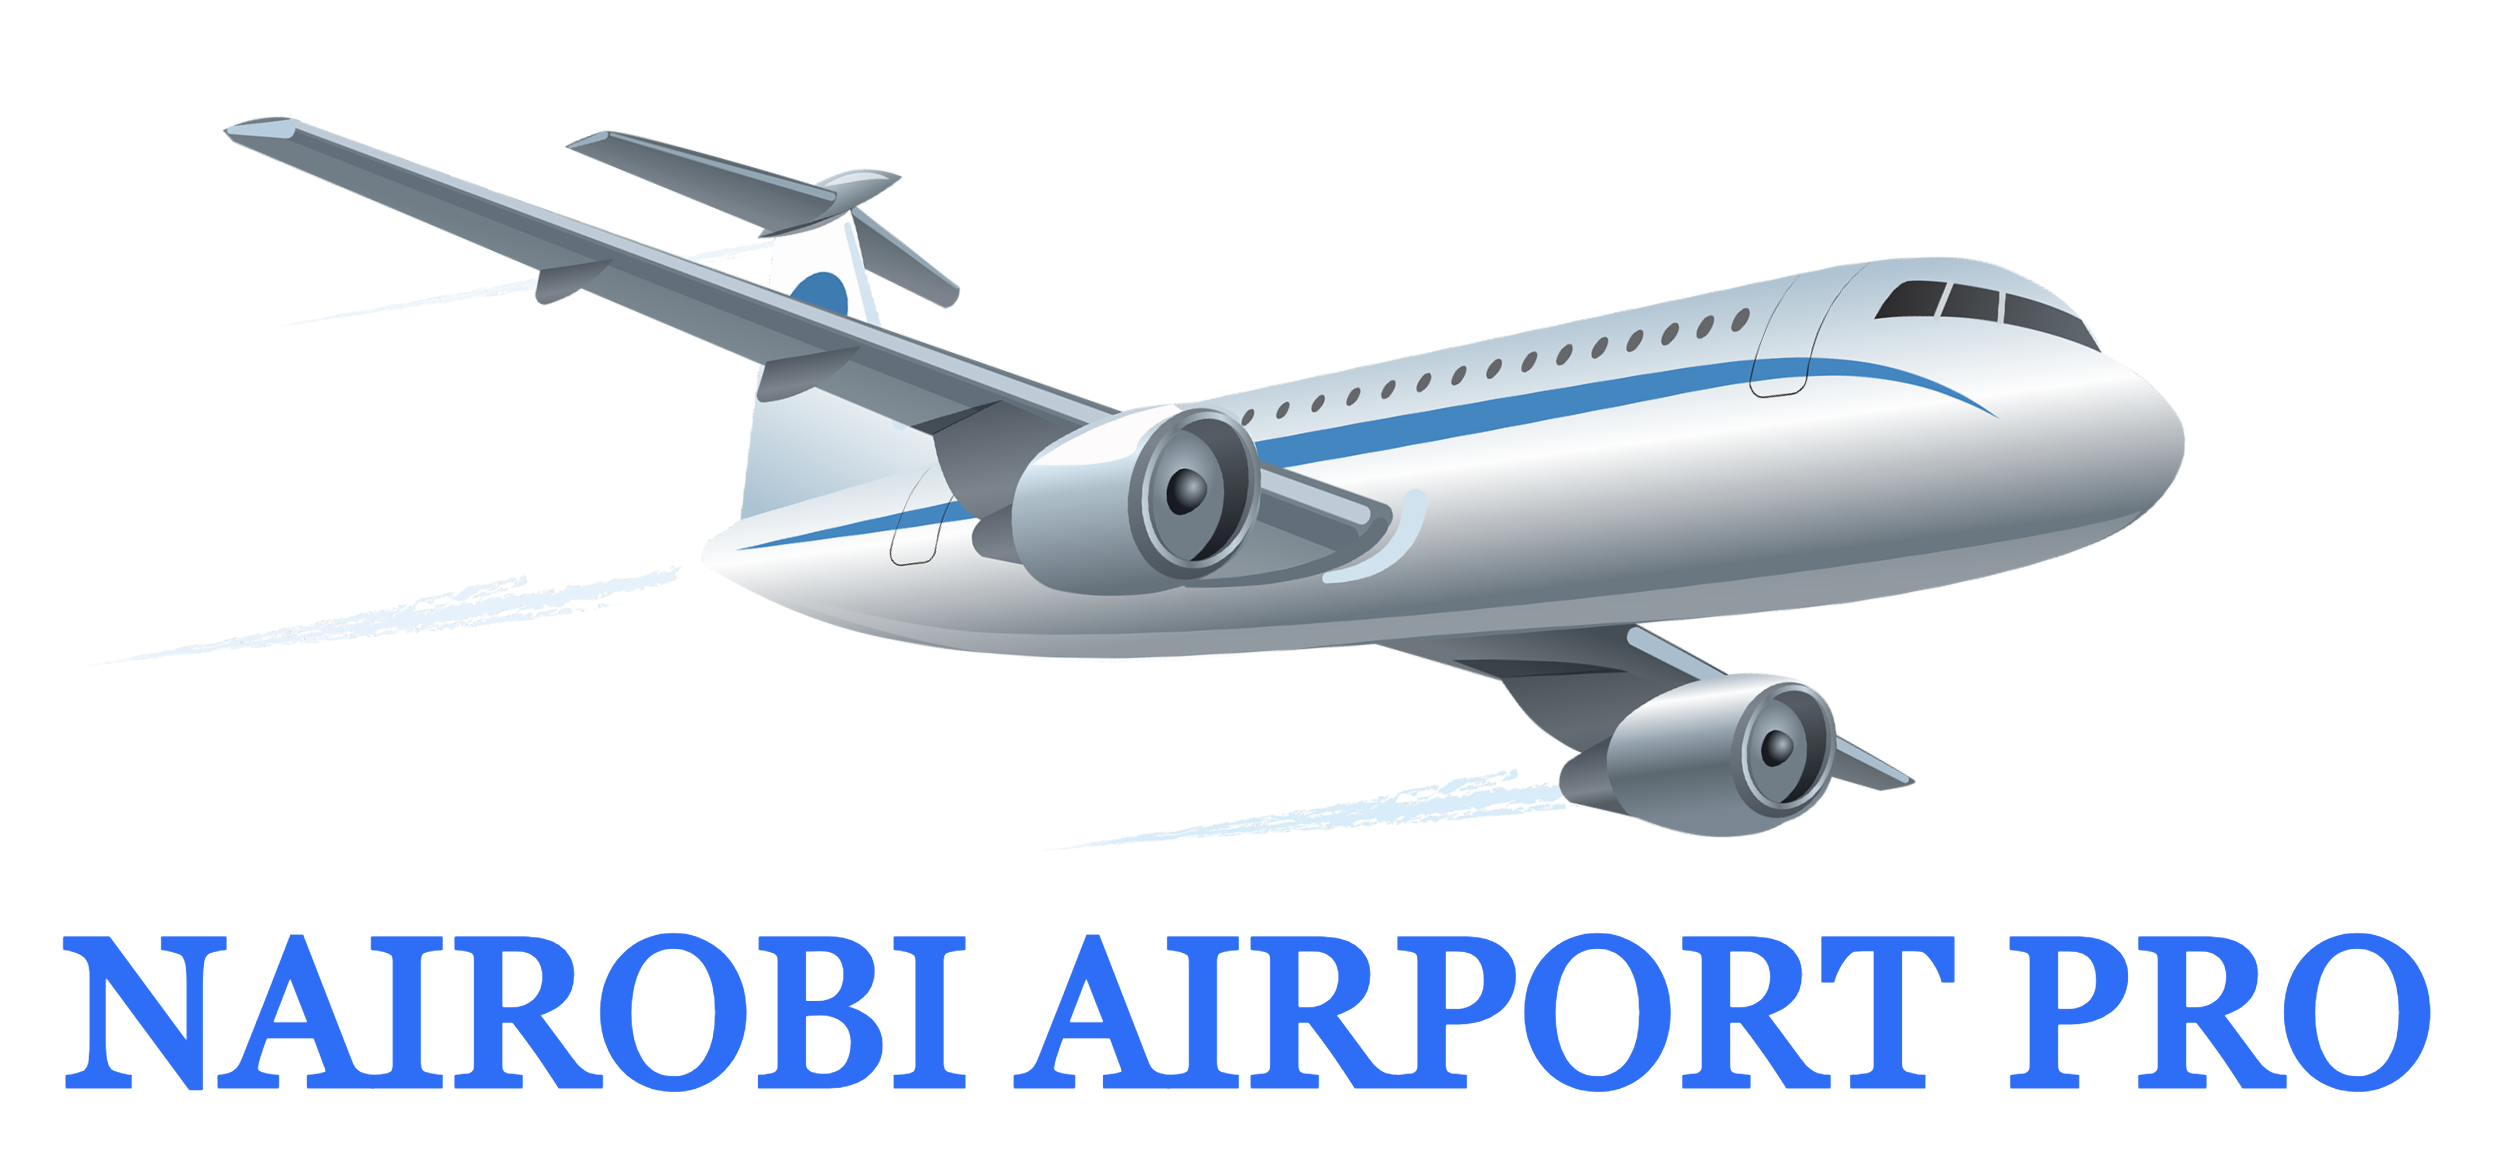 Nairobi Airport Pro | Search results global - Nairobi Airport Pro